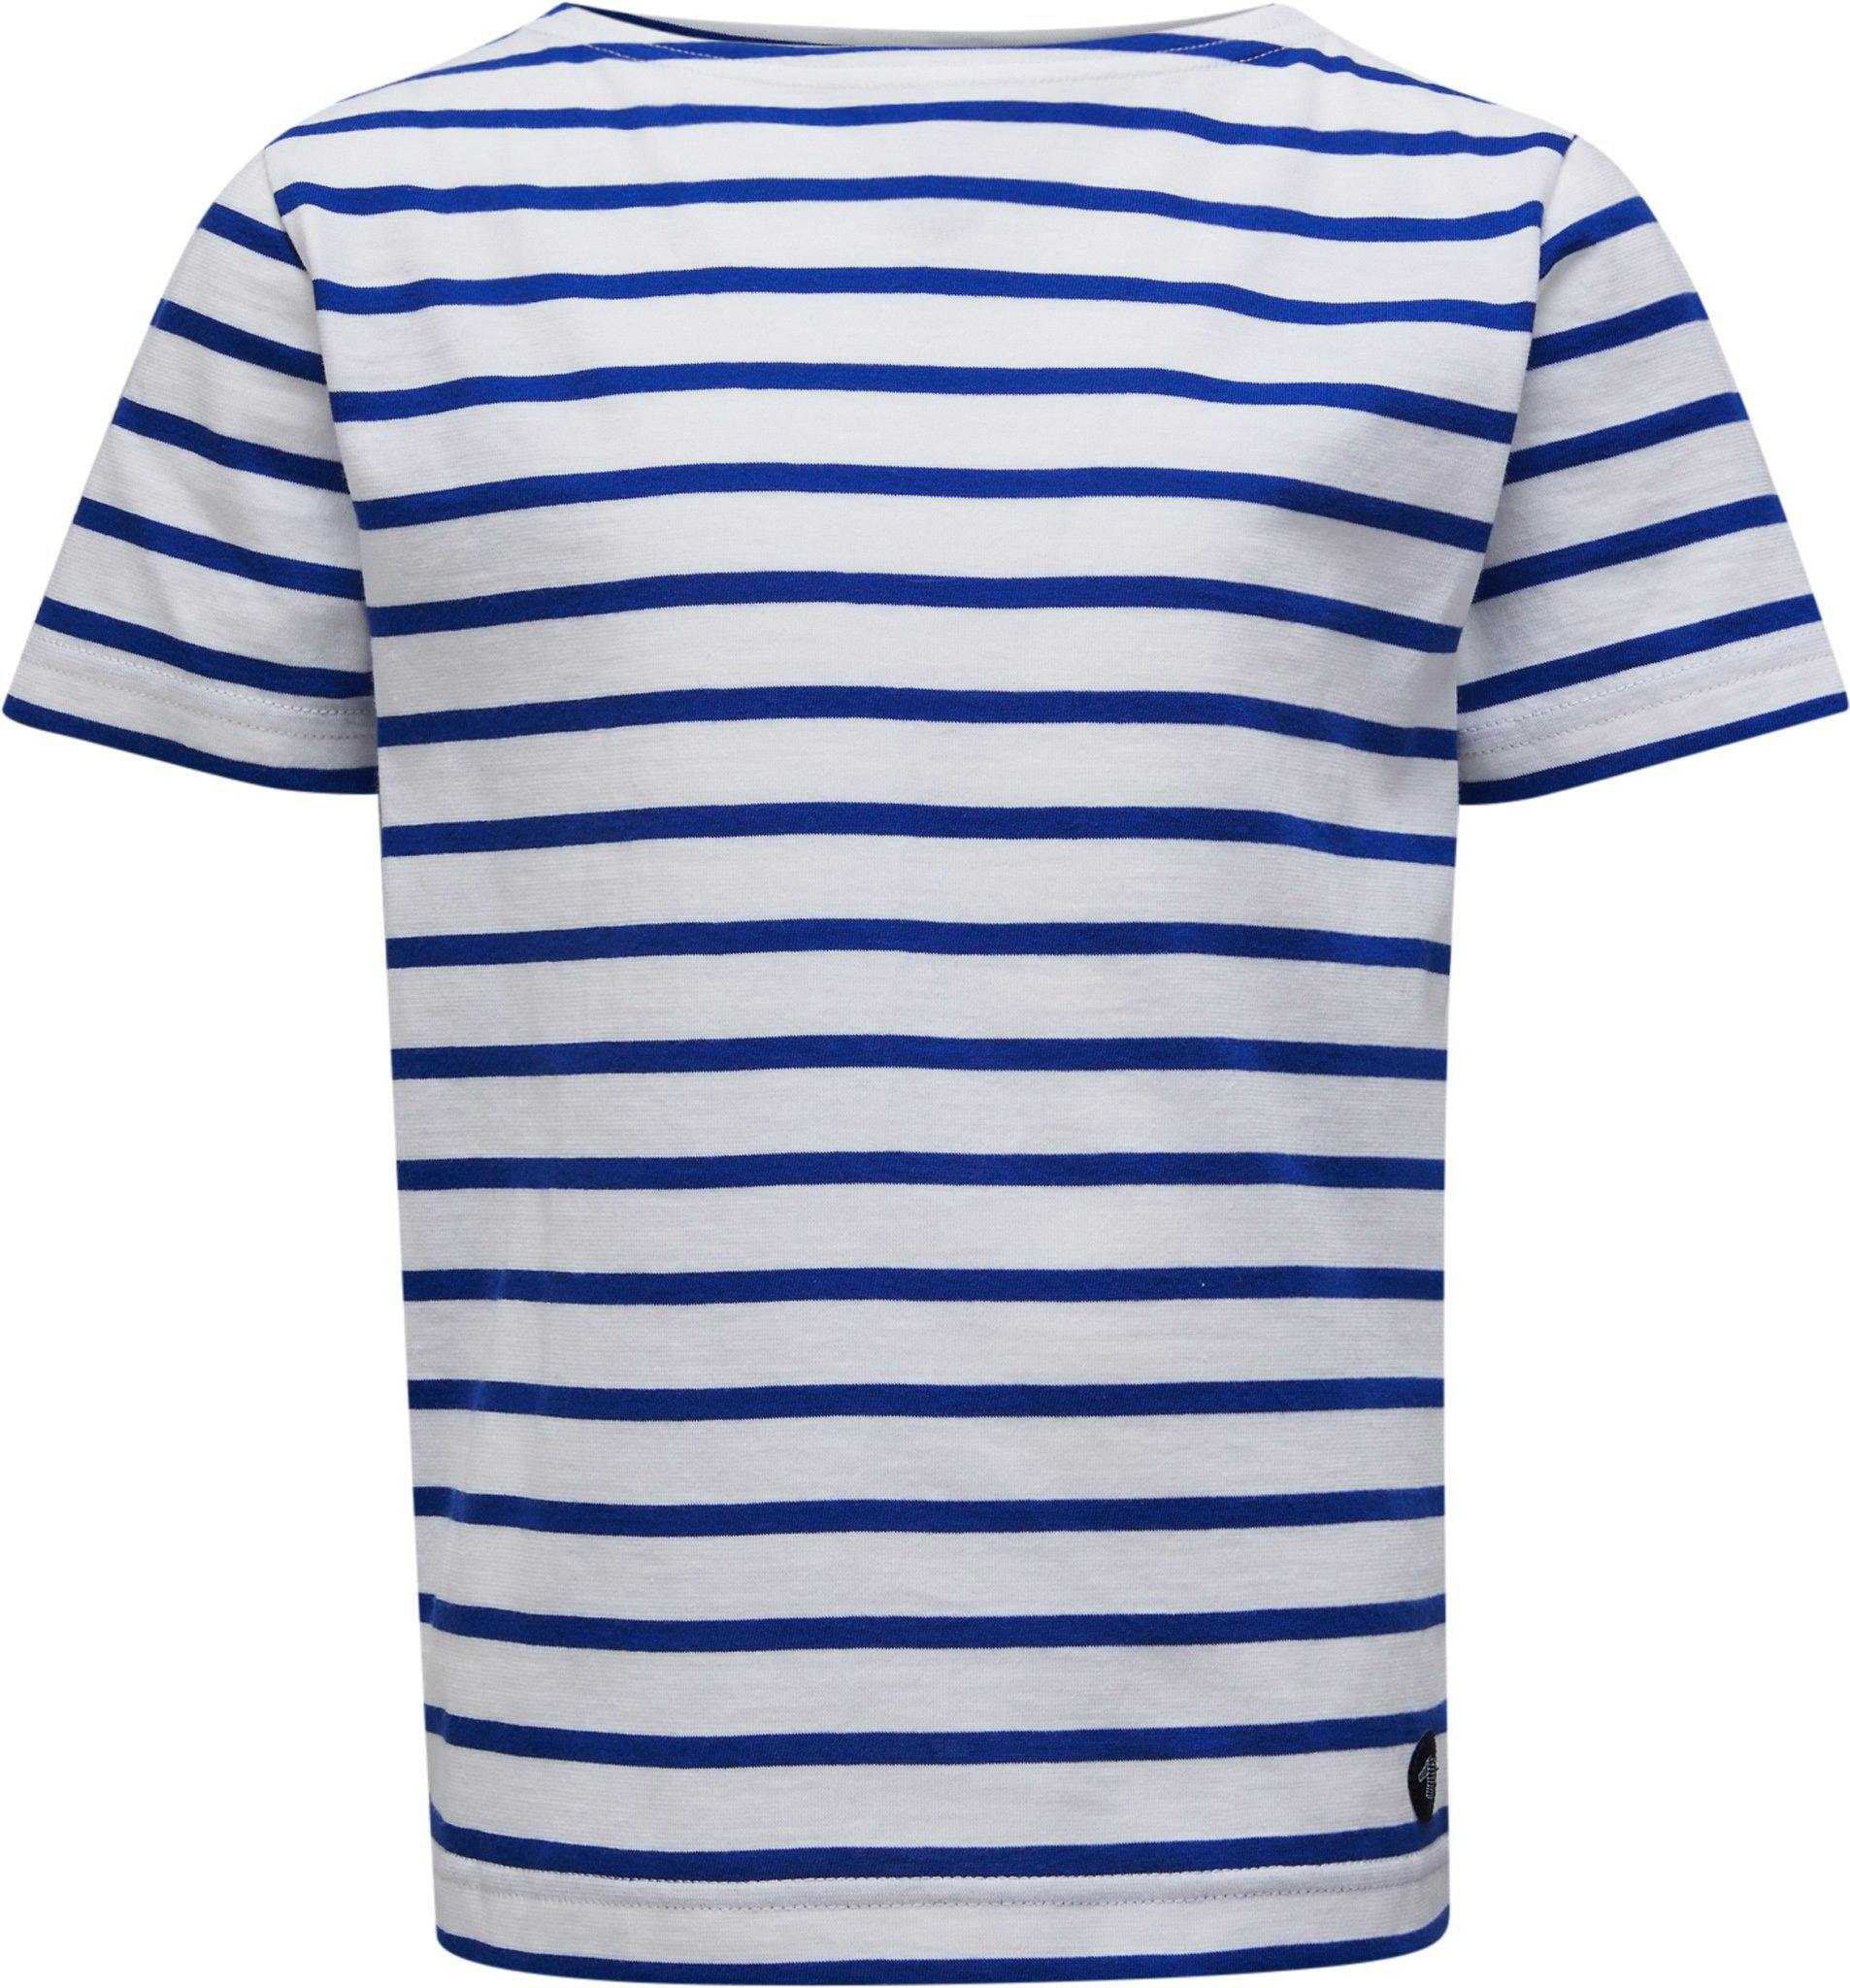 Product image for Hoëdic Light Cotton Breton Striped Jersey - Kids